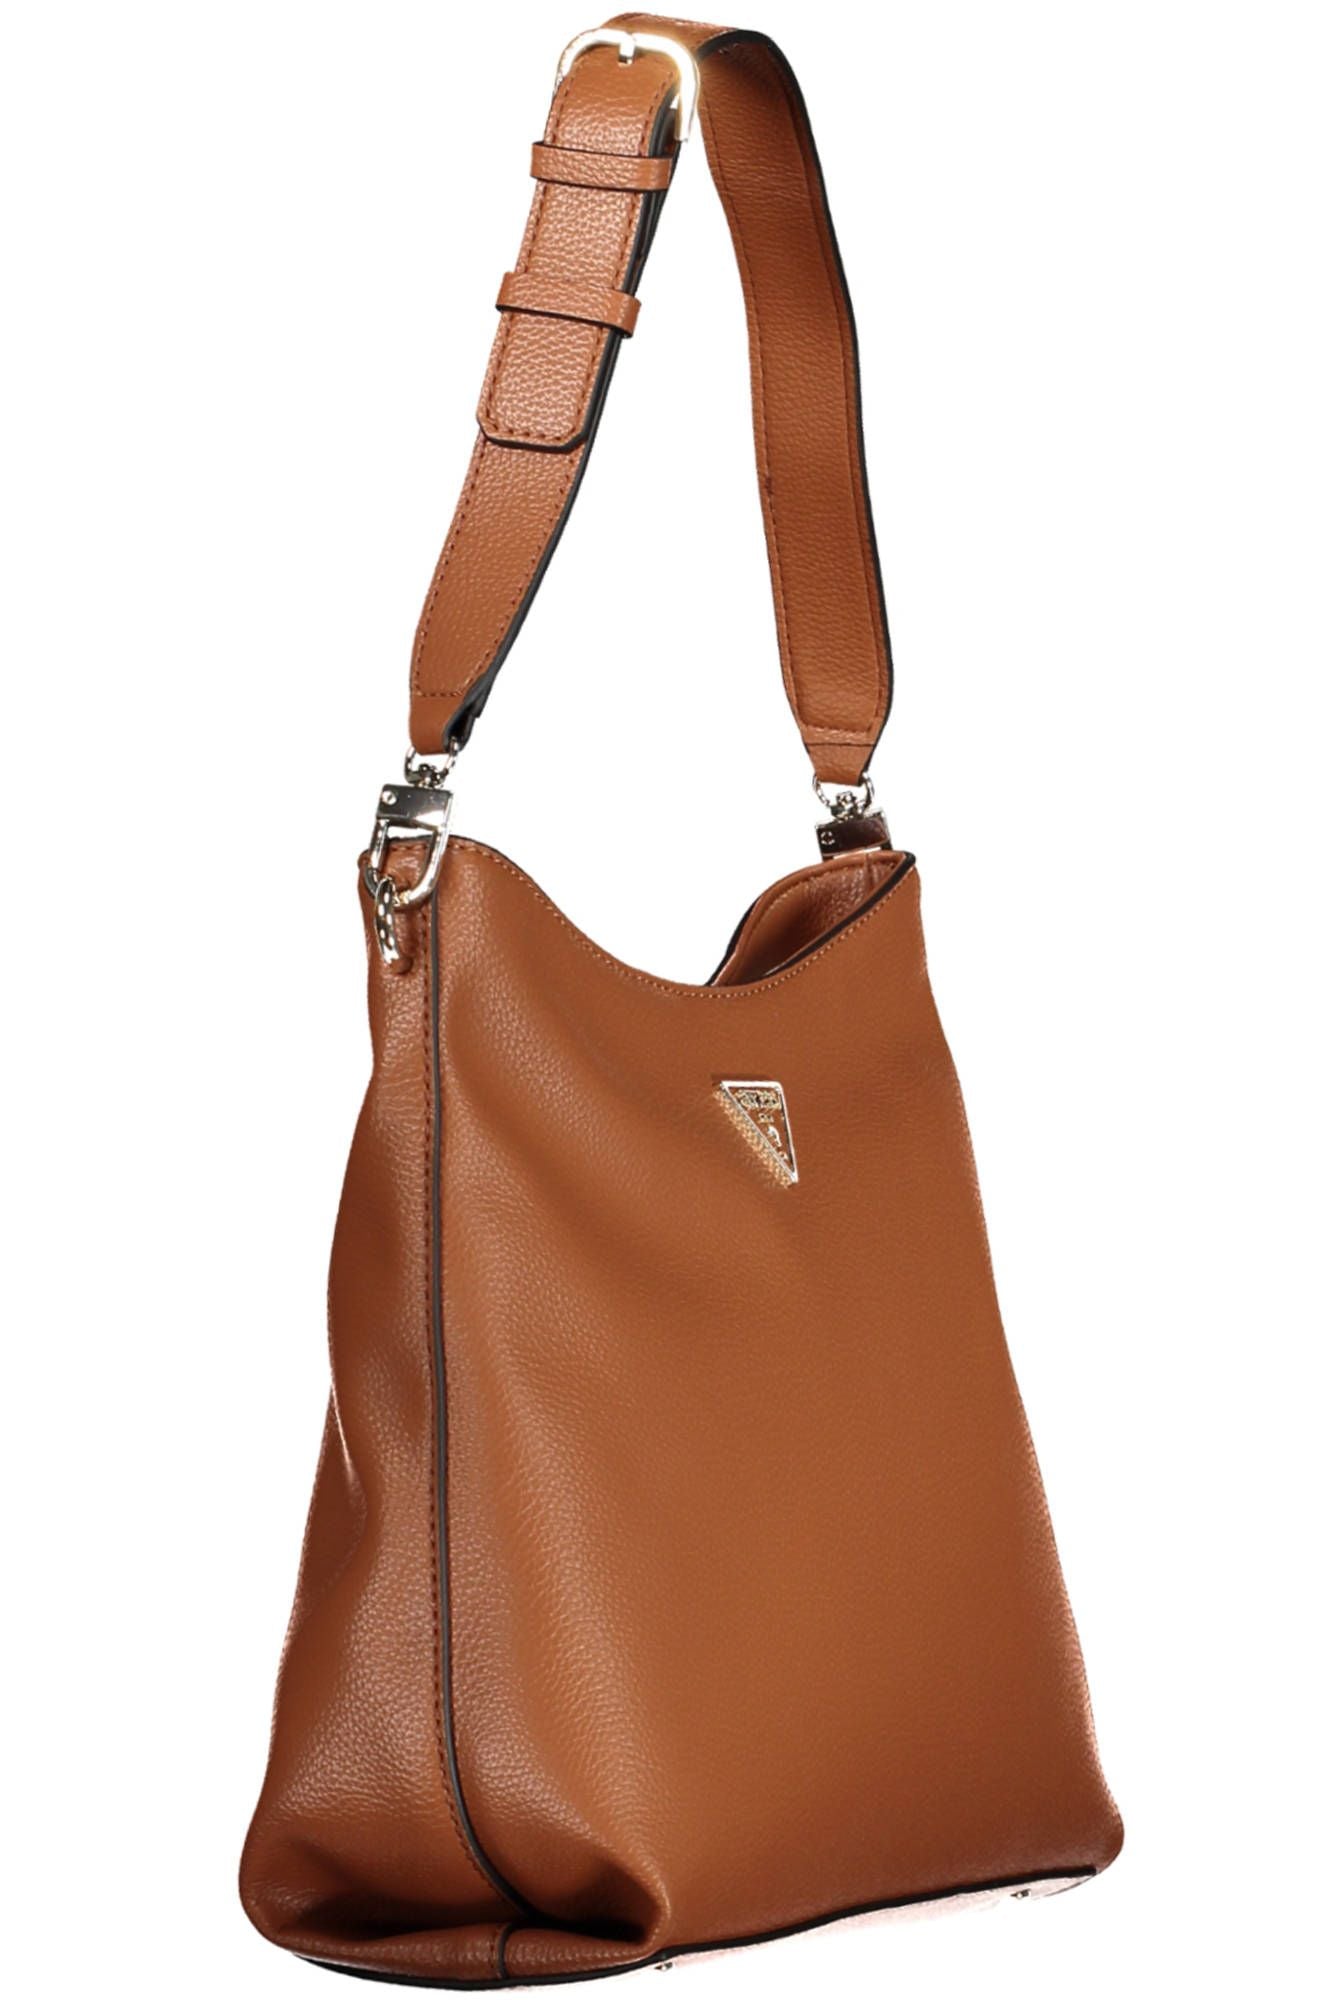 Chic Brown Shoulder Bag with Logo Detail